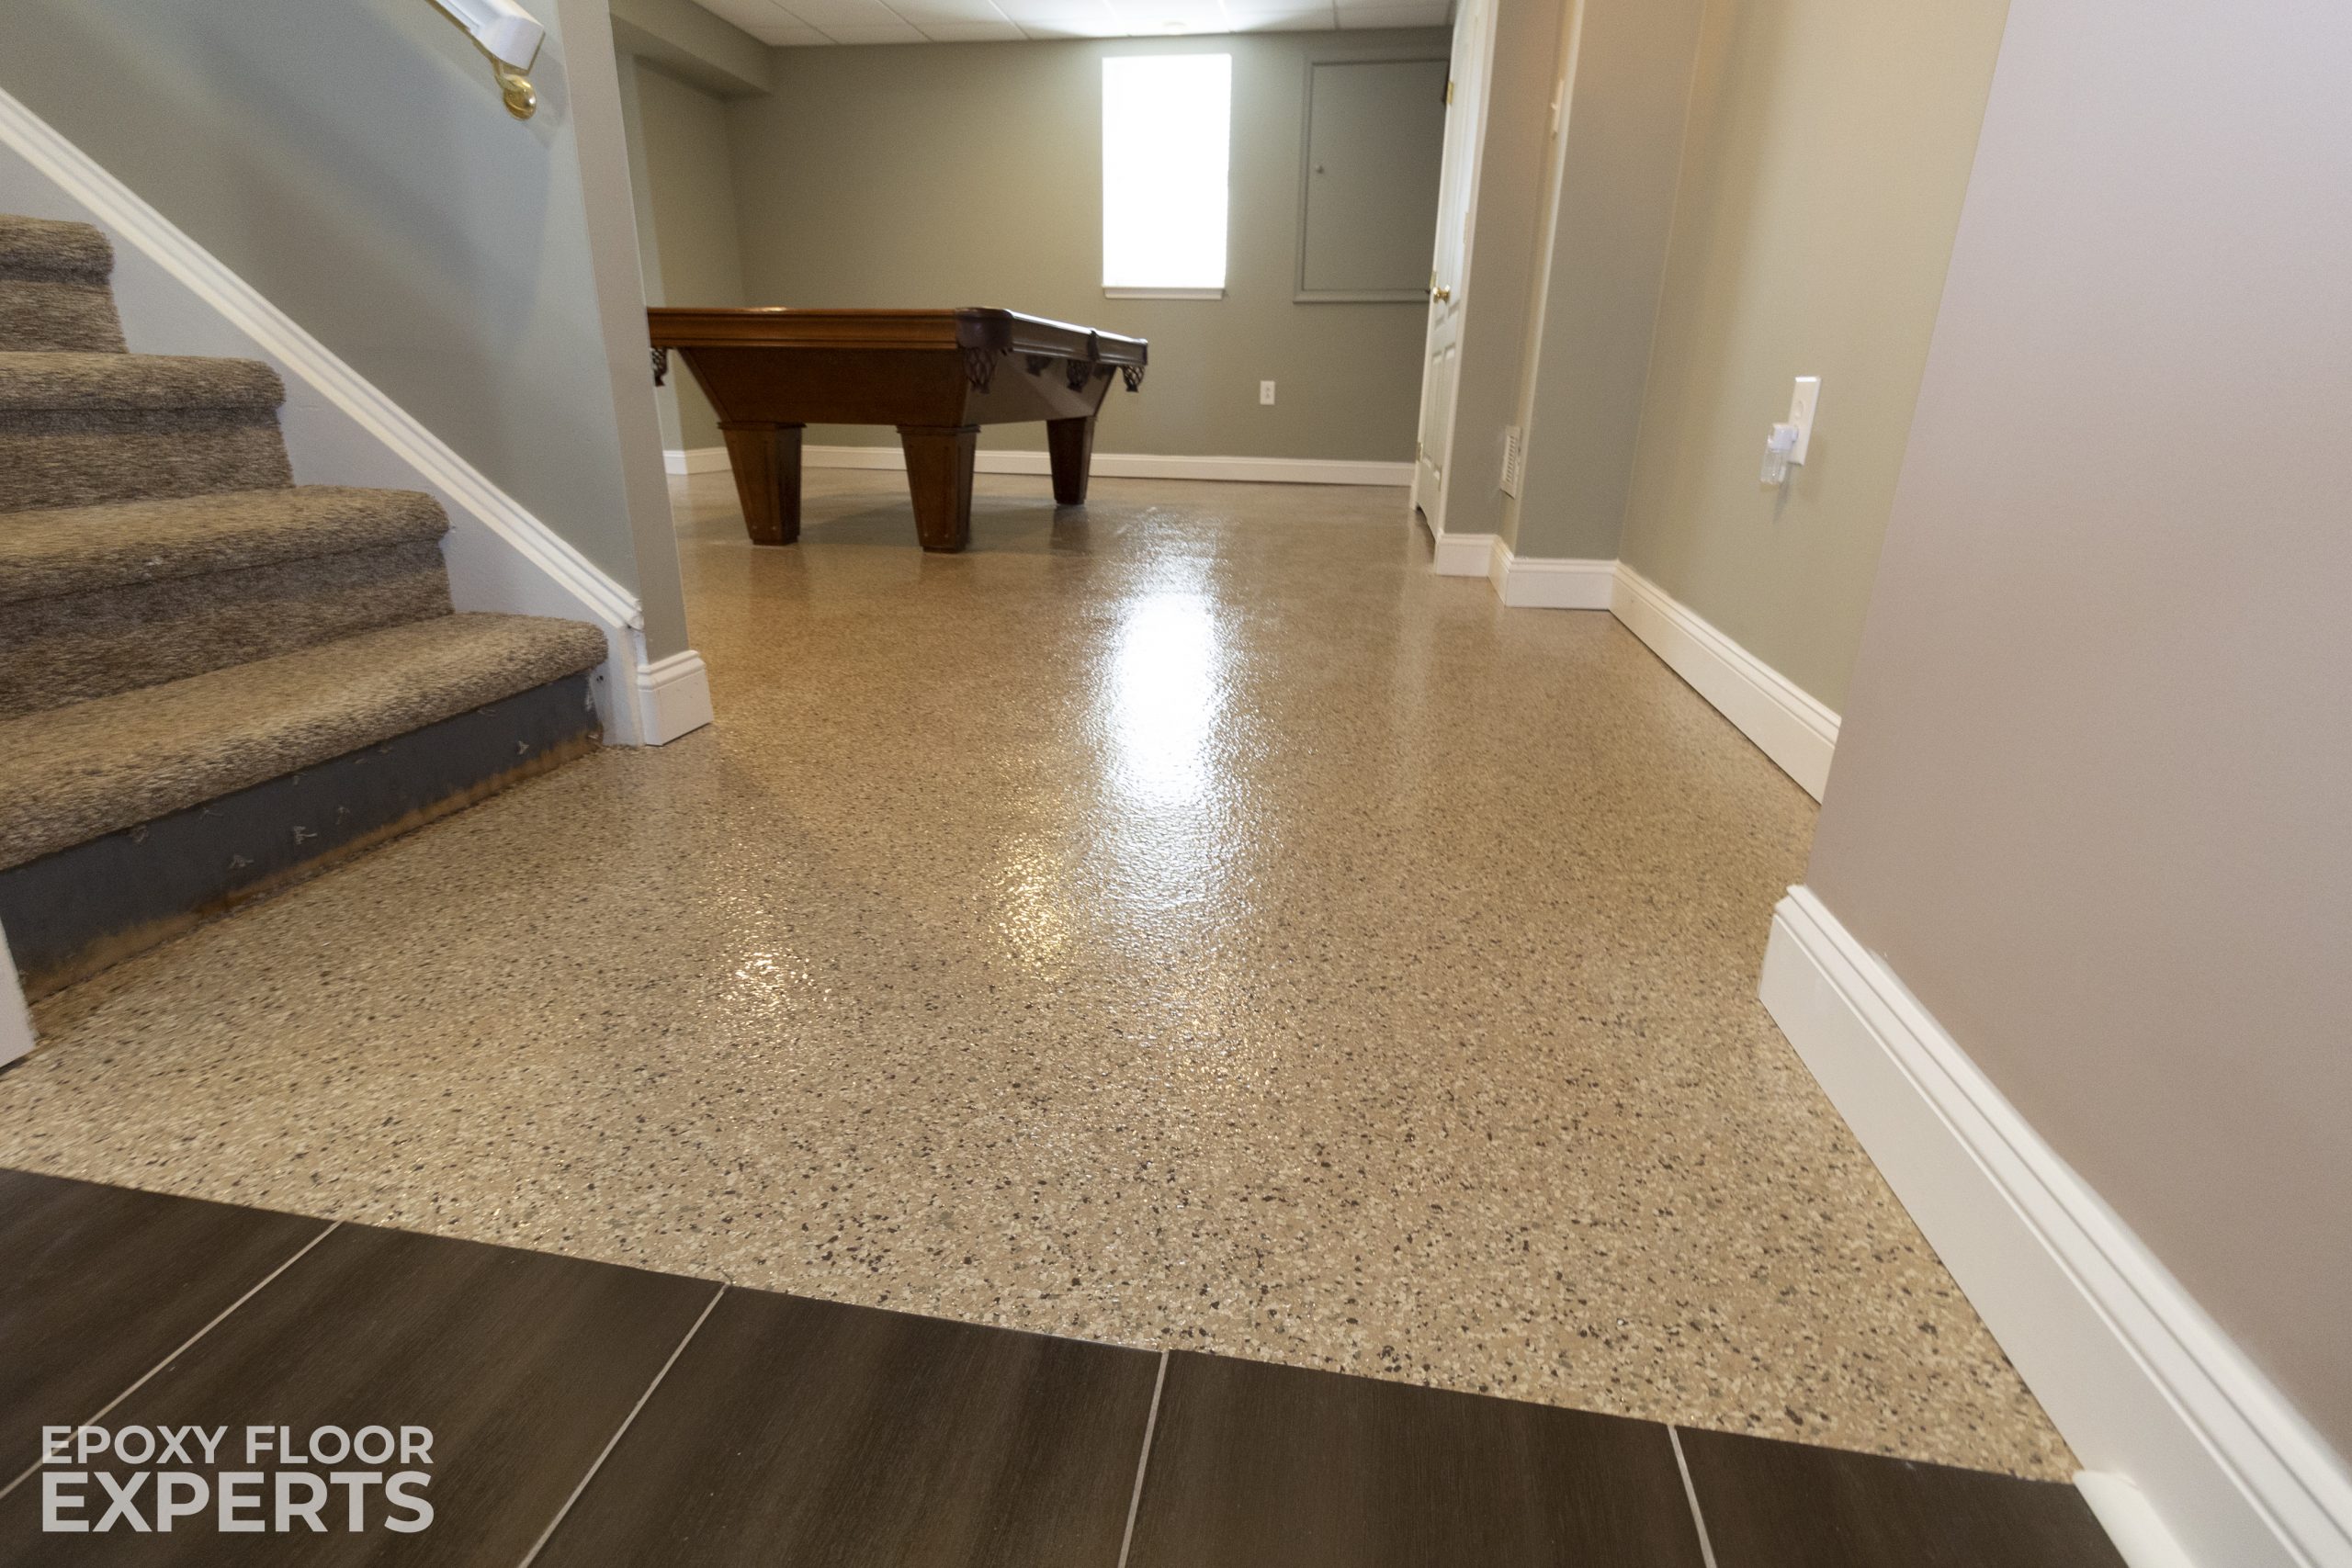 Flake epoxy flooring for basement concrete